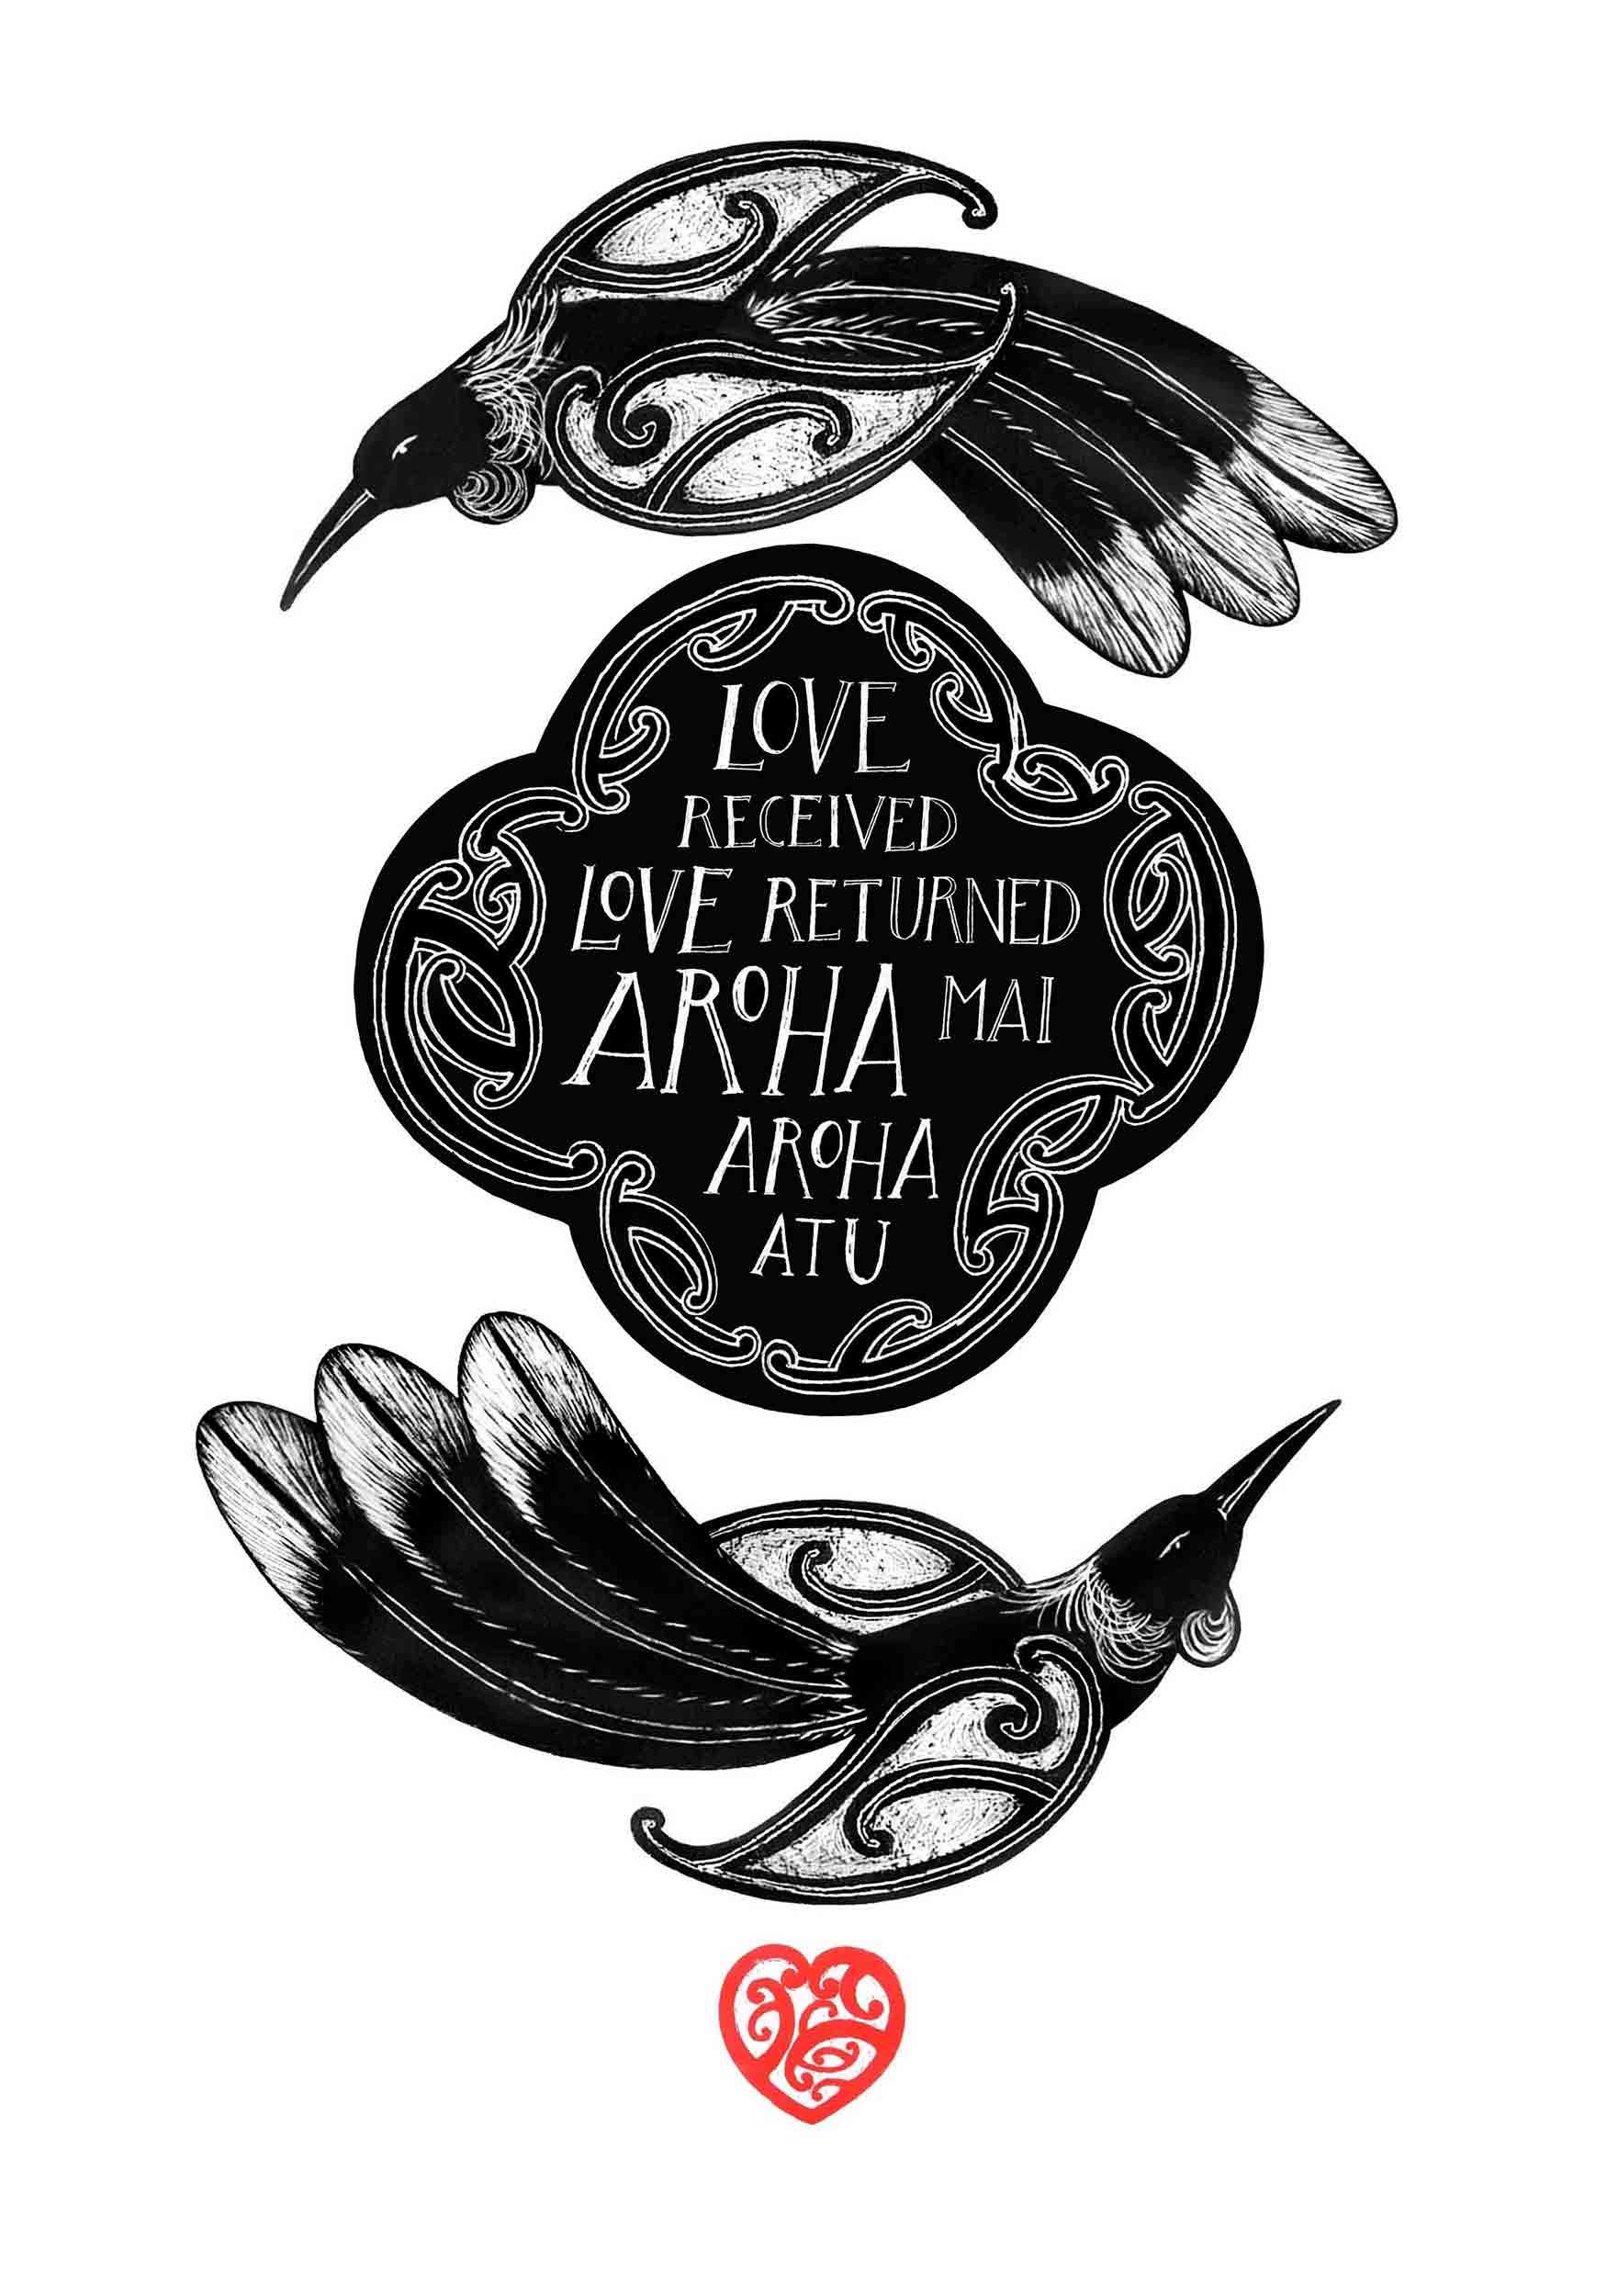 nz art print with words in te reo maori and english, Aroha mai aroha atu. Maori art tui birds. By Amber Smith Nz artist.